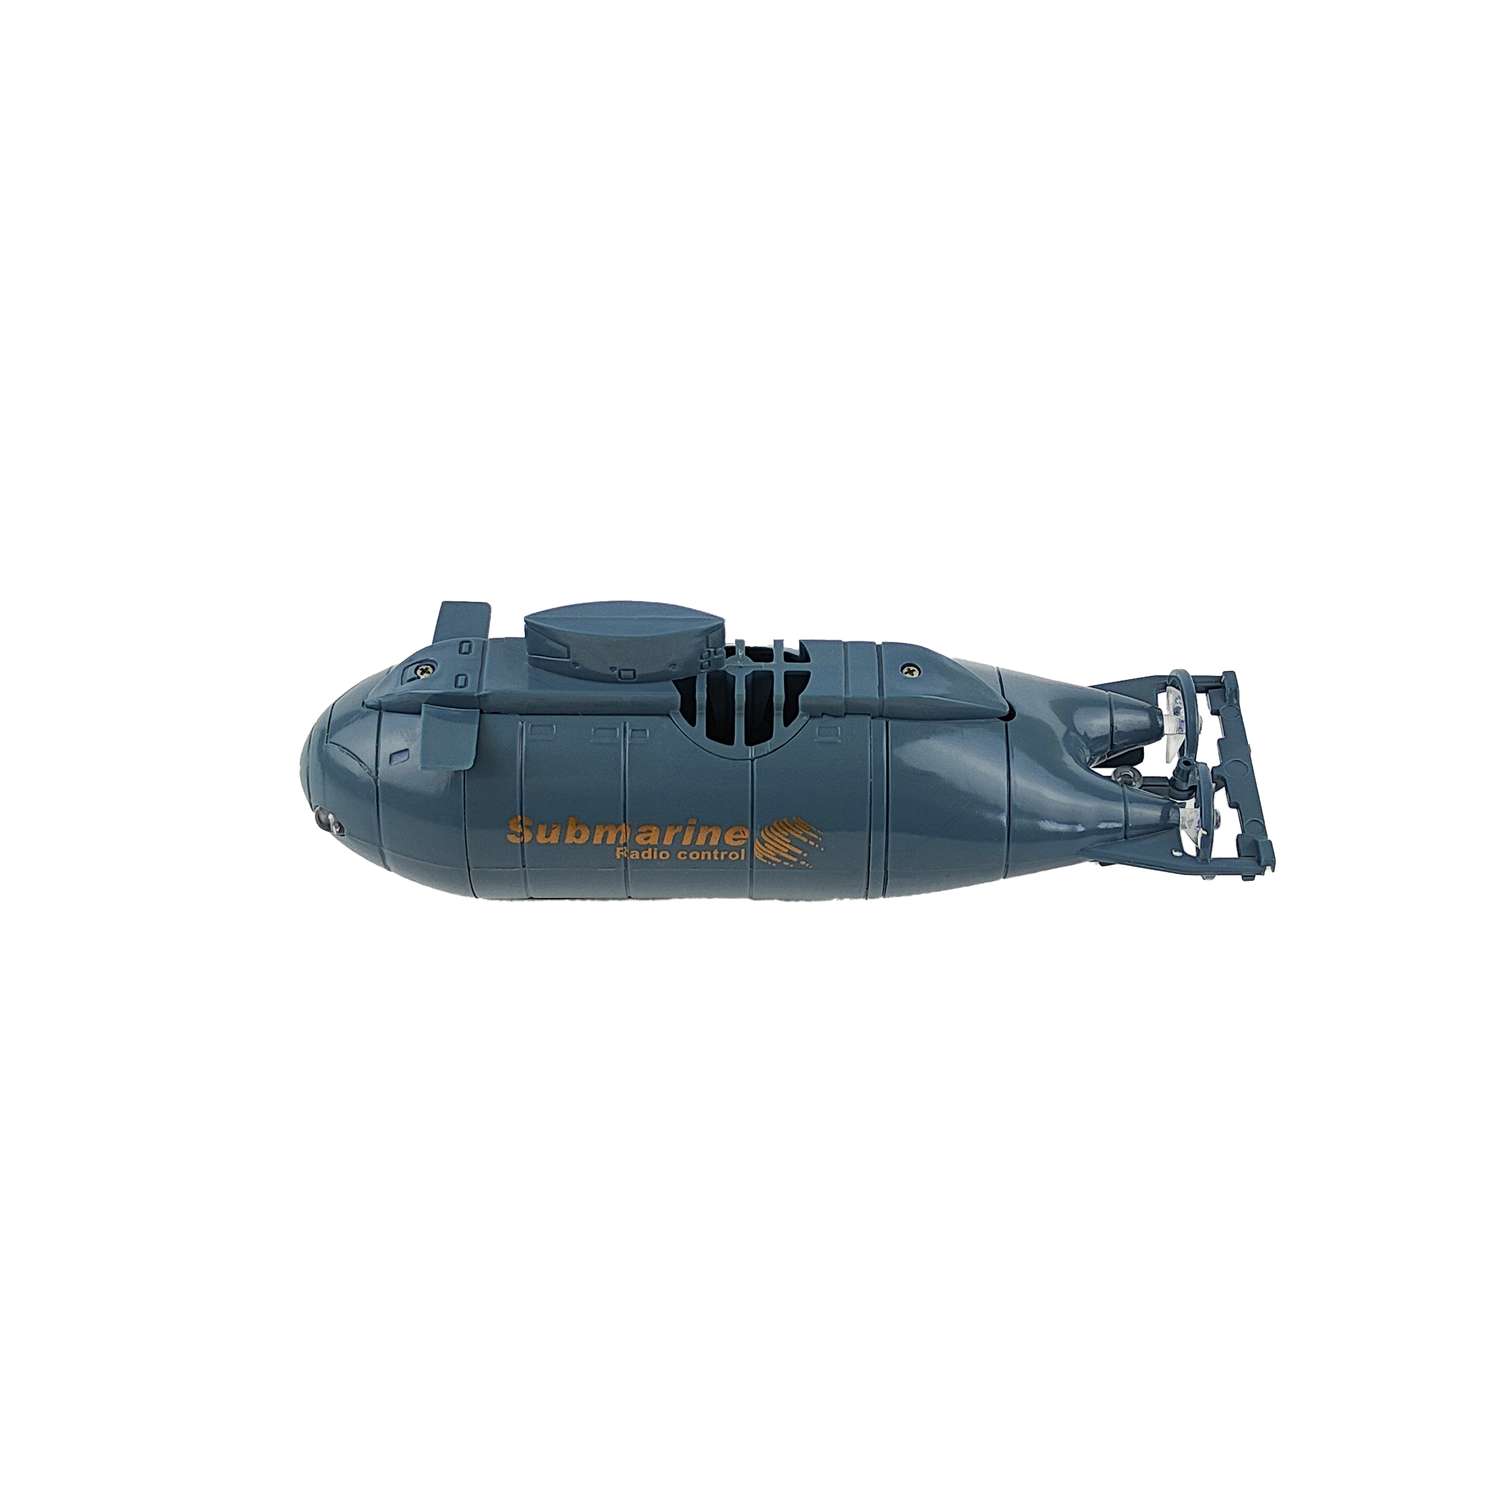 Подводная лодка на р/у Happy Cow Submarine Radio control с подсветкой - фото 2